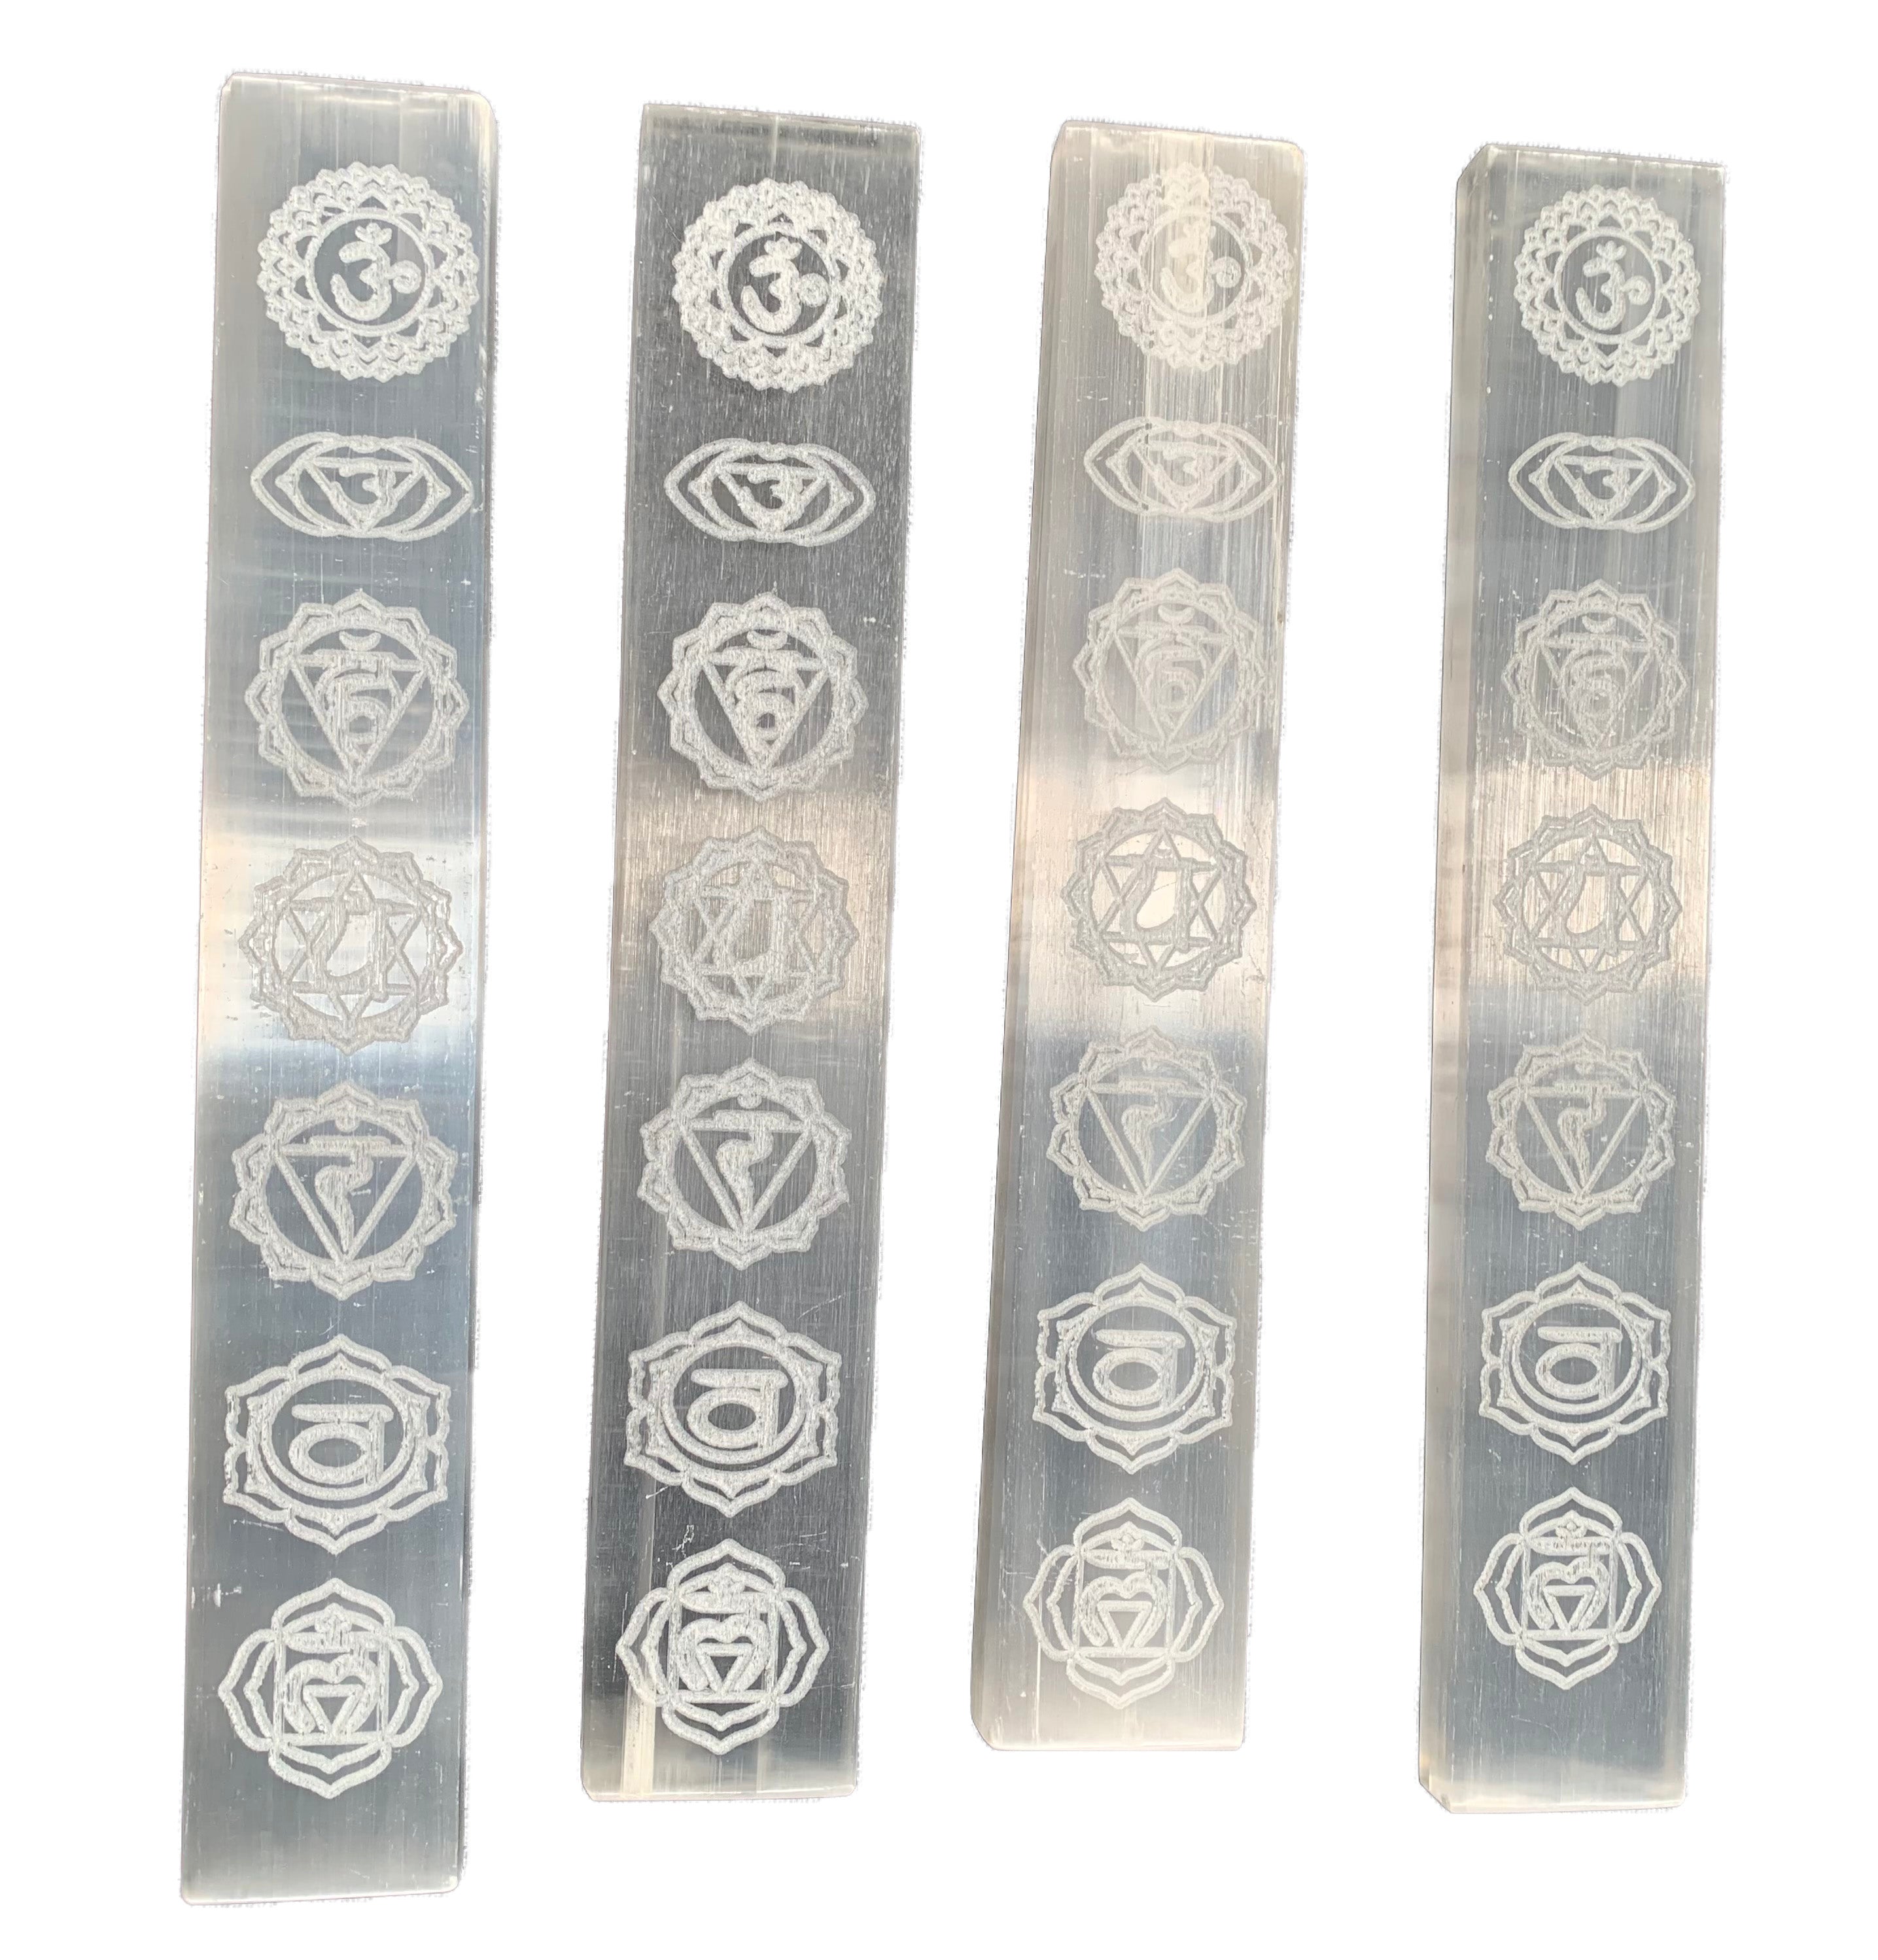 Chakra Symbols Selenite Crystal Charging Plate